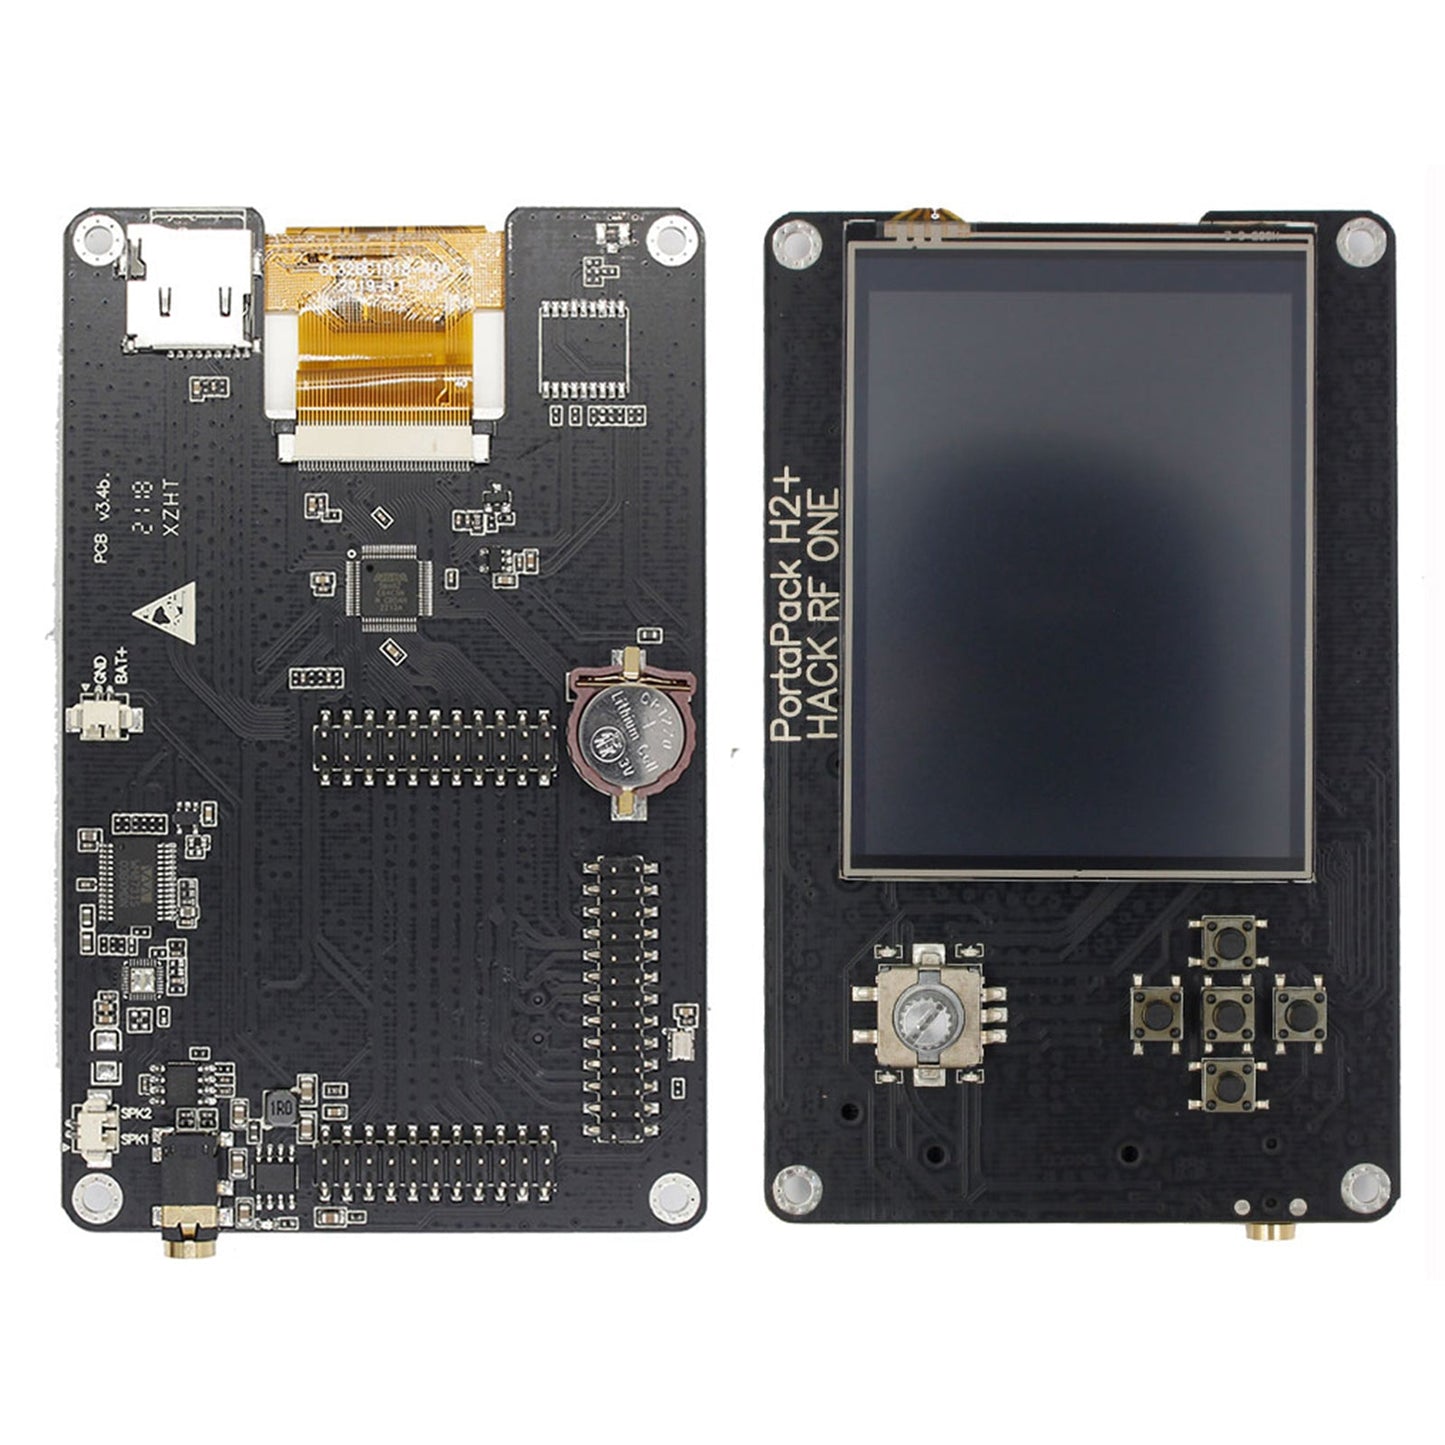 Aktualisiertes HackRF One V1.7.3 Portapack H2 1 MHz–6 GHz SDR Software Defined Wireless